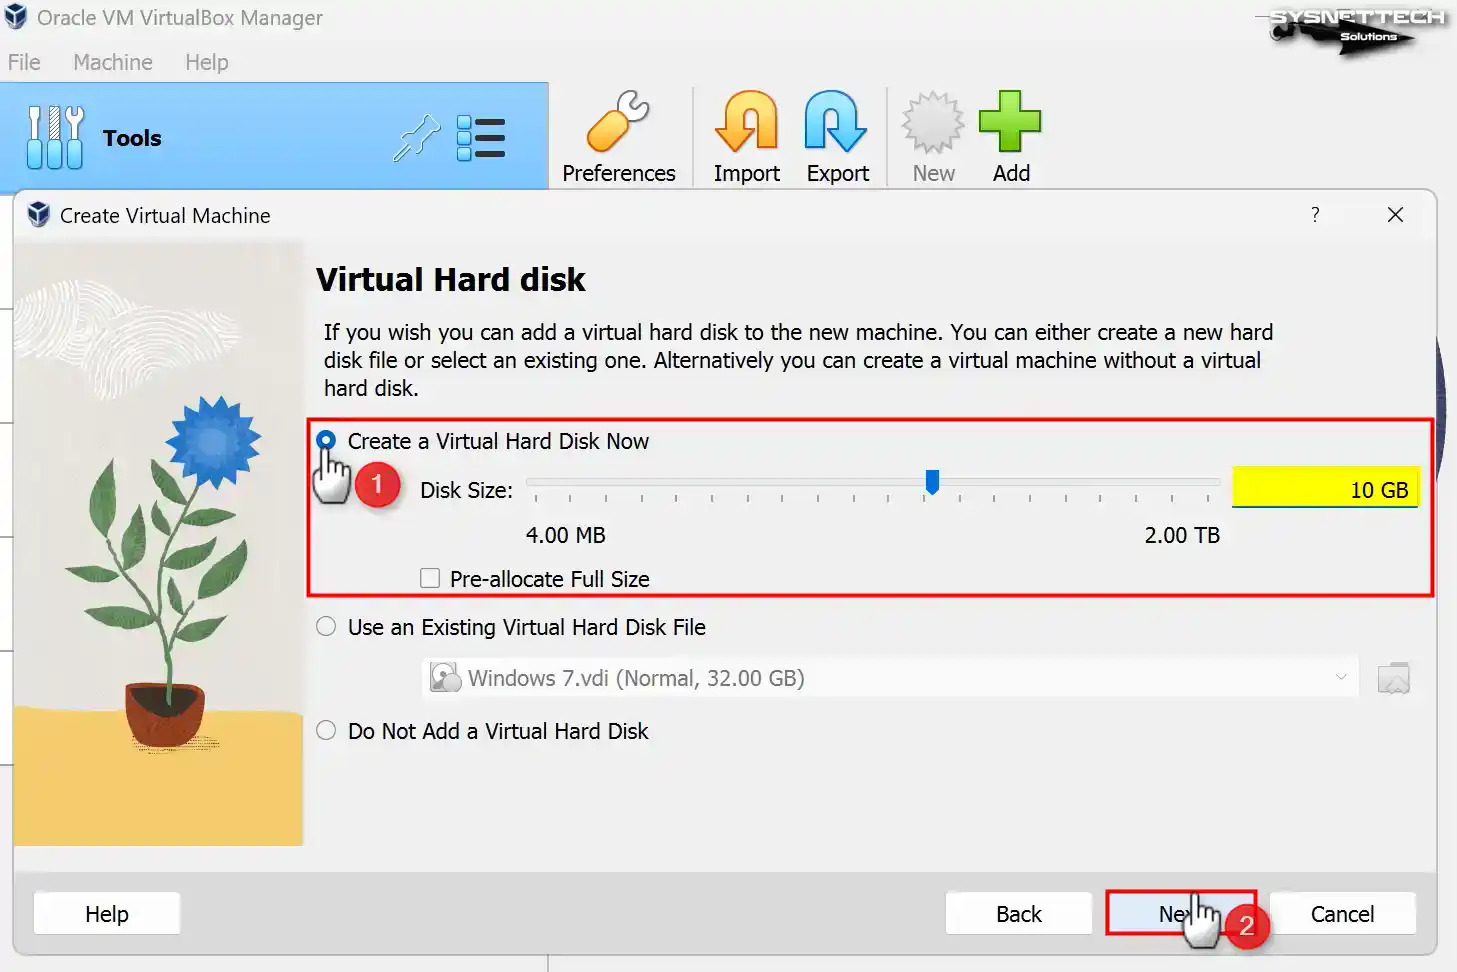 Create a New Virtual Hard Disk